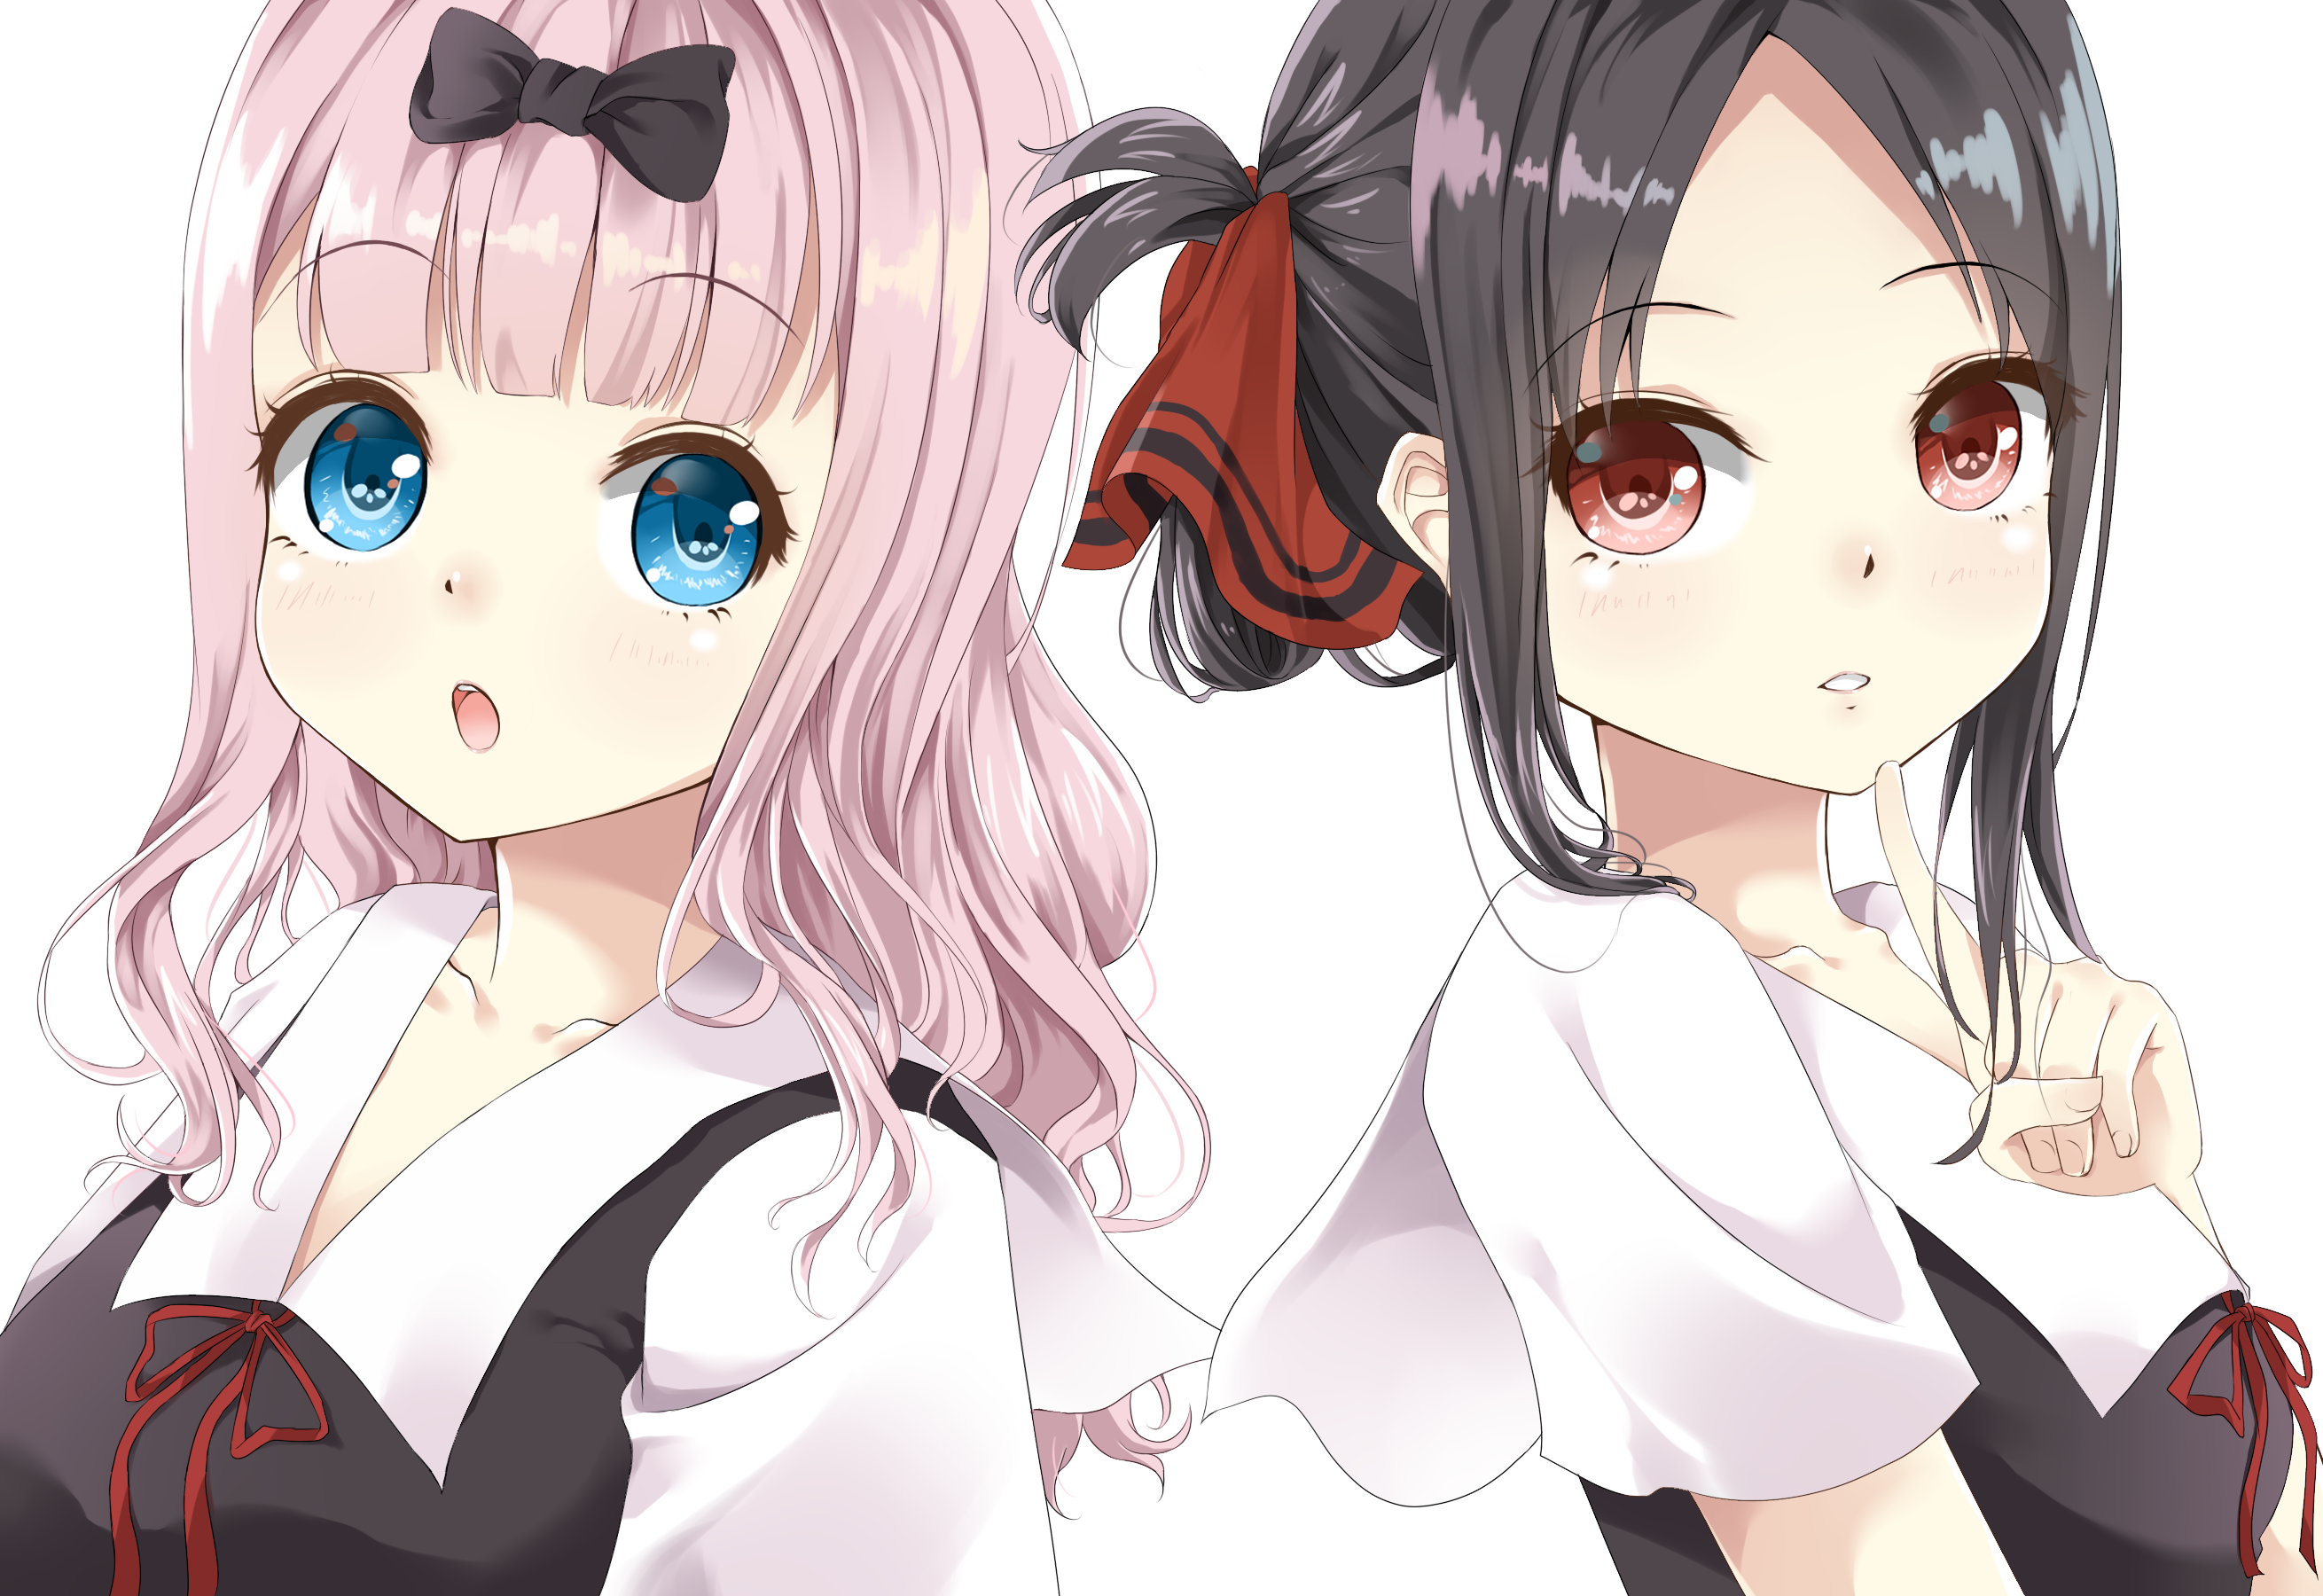 Kaguya and Chika by cenruier